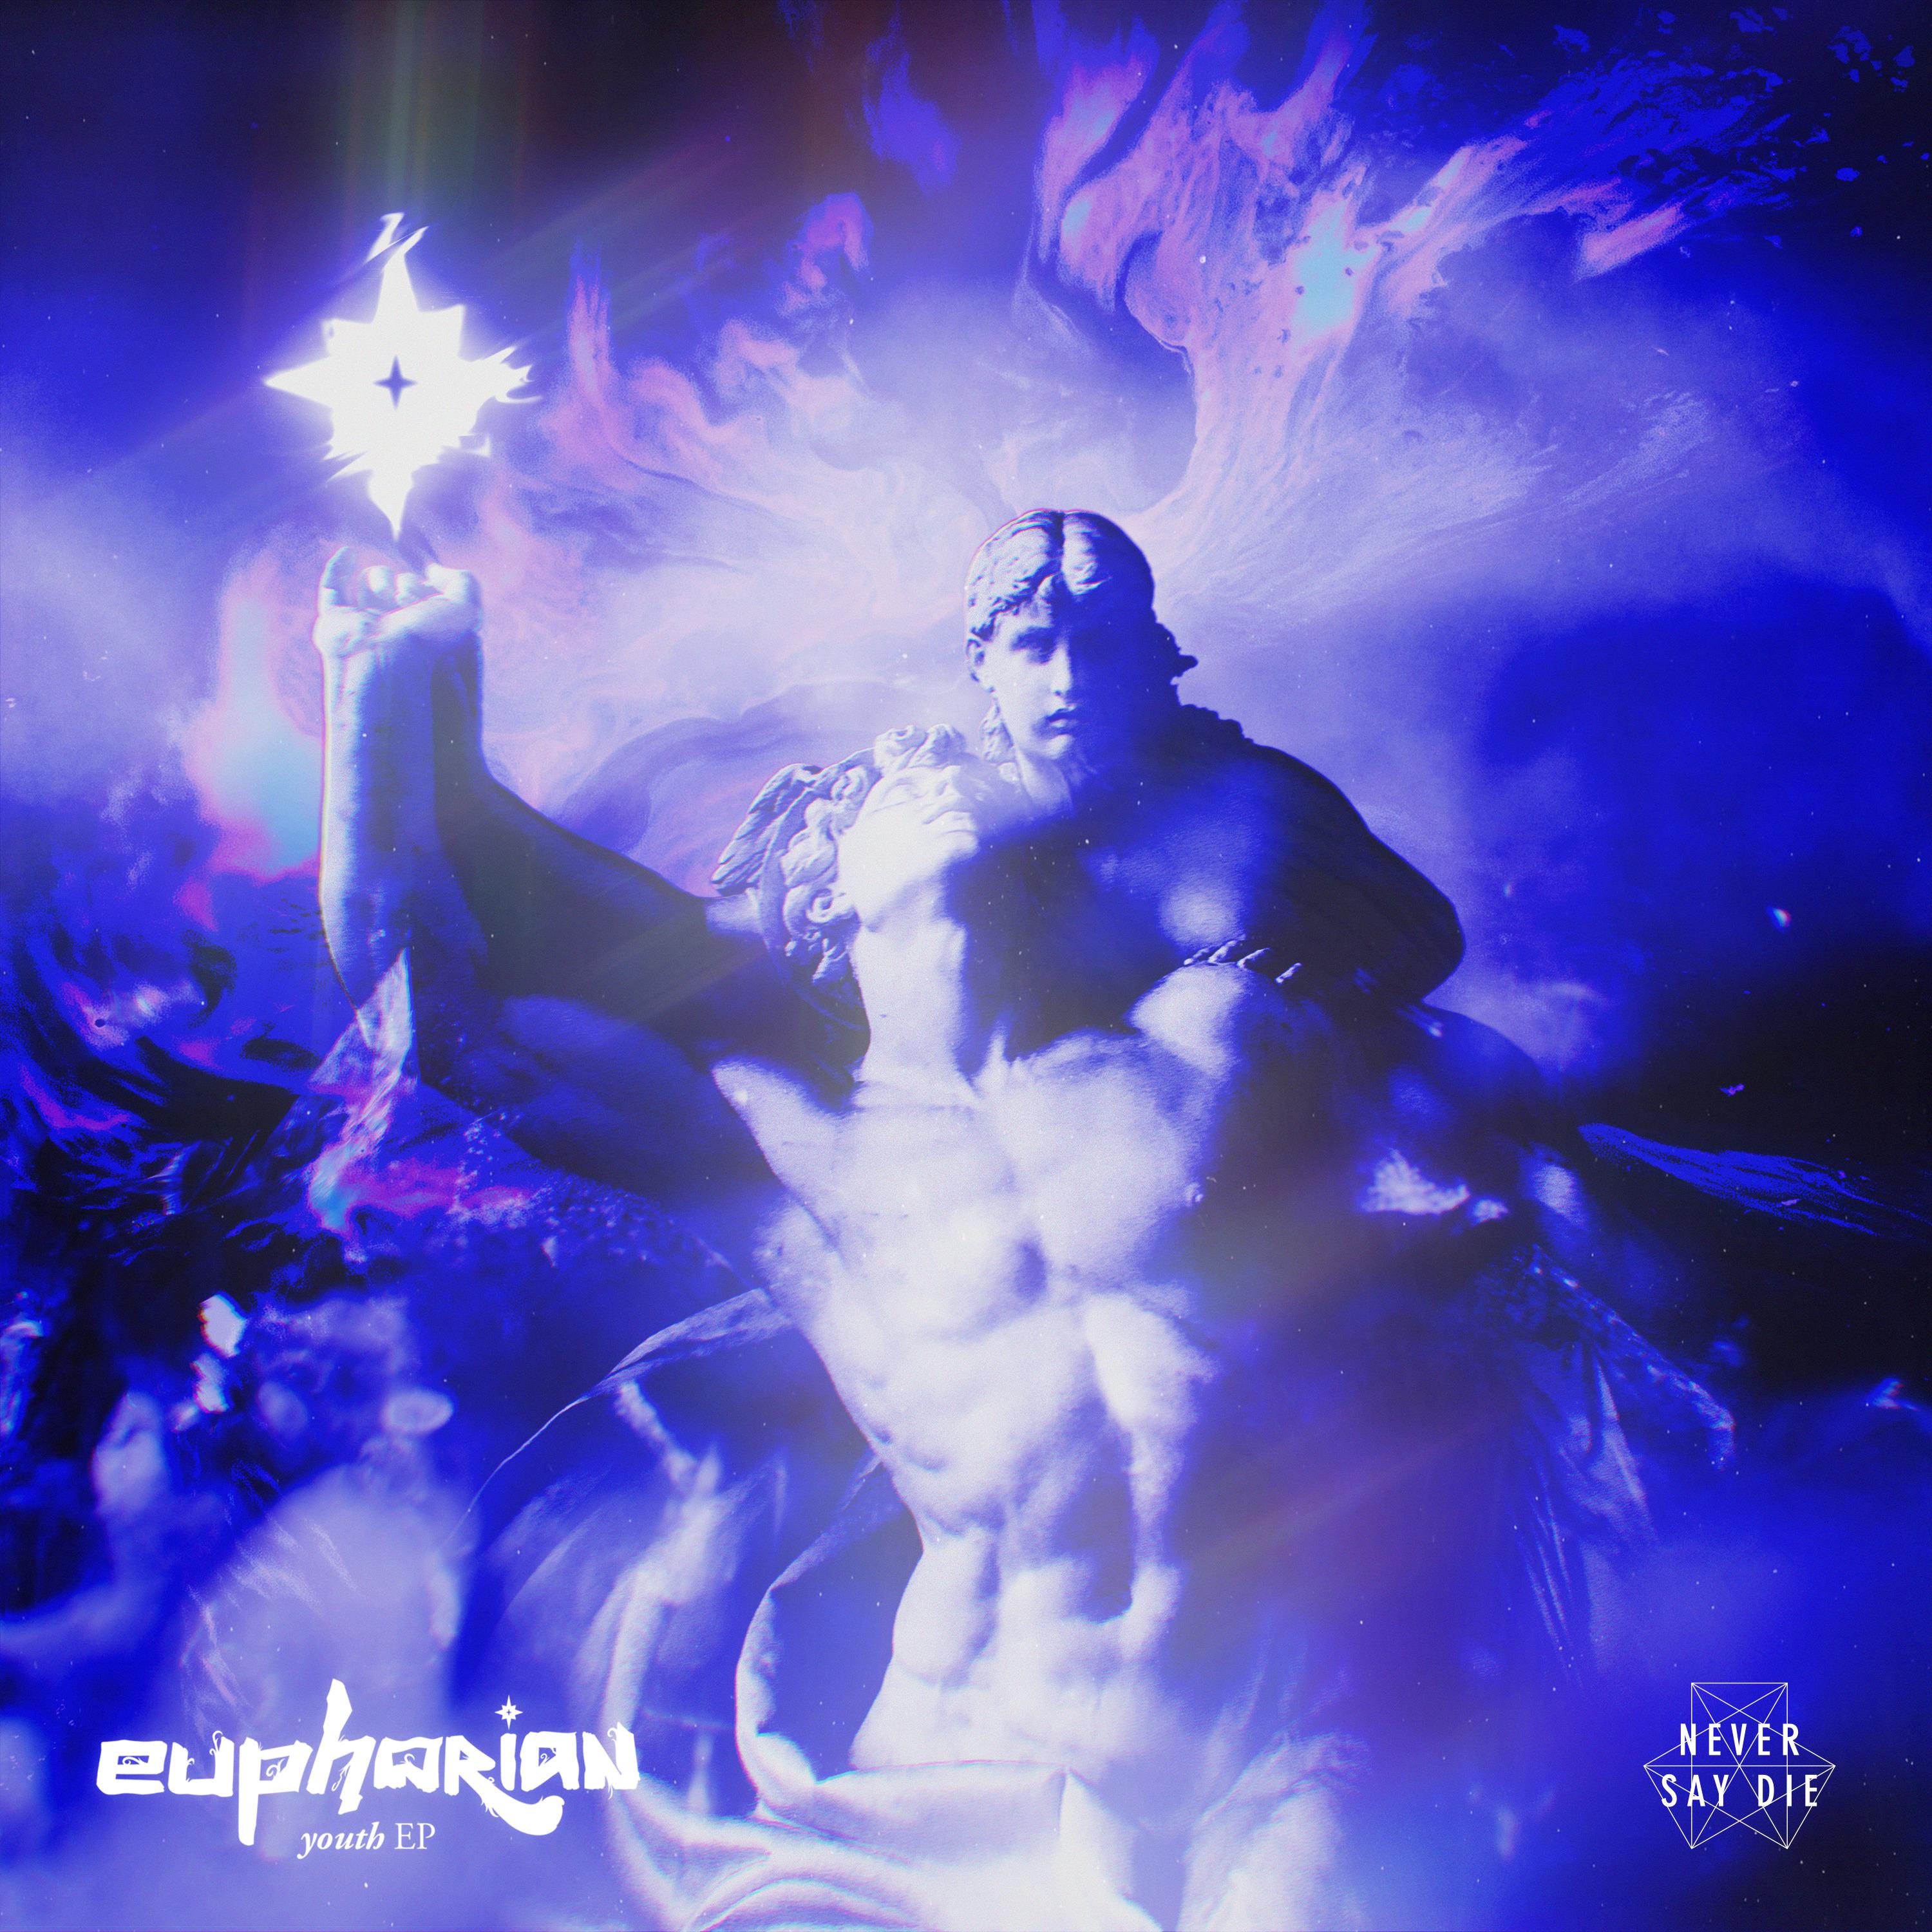 joy wave歌词 歌手Euphorian / Skybreak-专辑youth EP-单曲《joy wave》LRC歌词下载